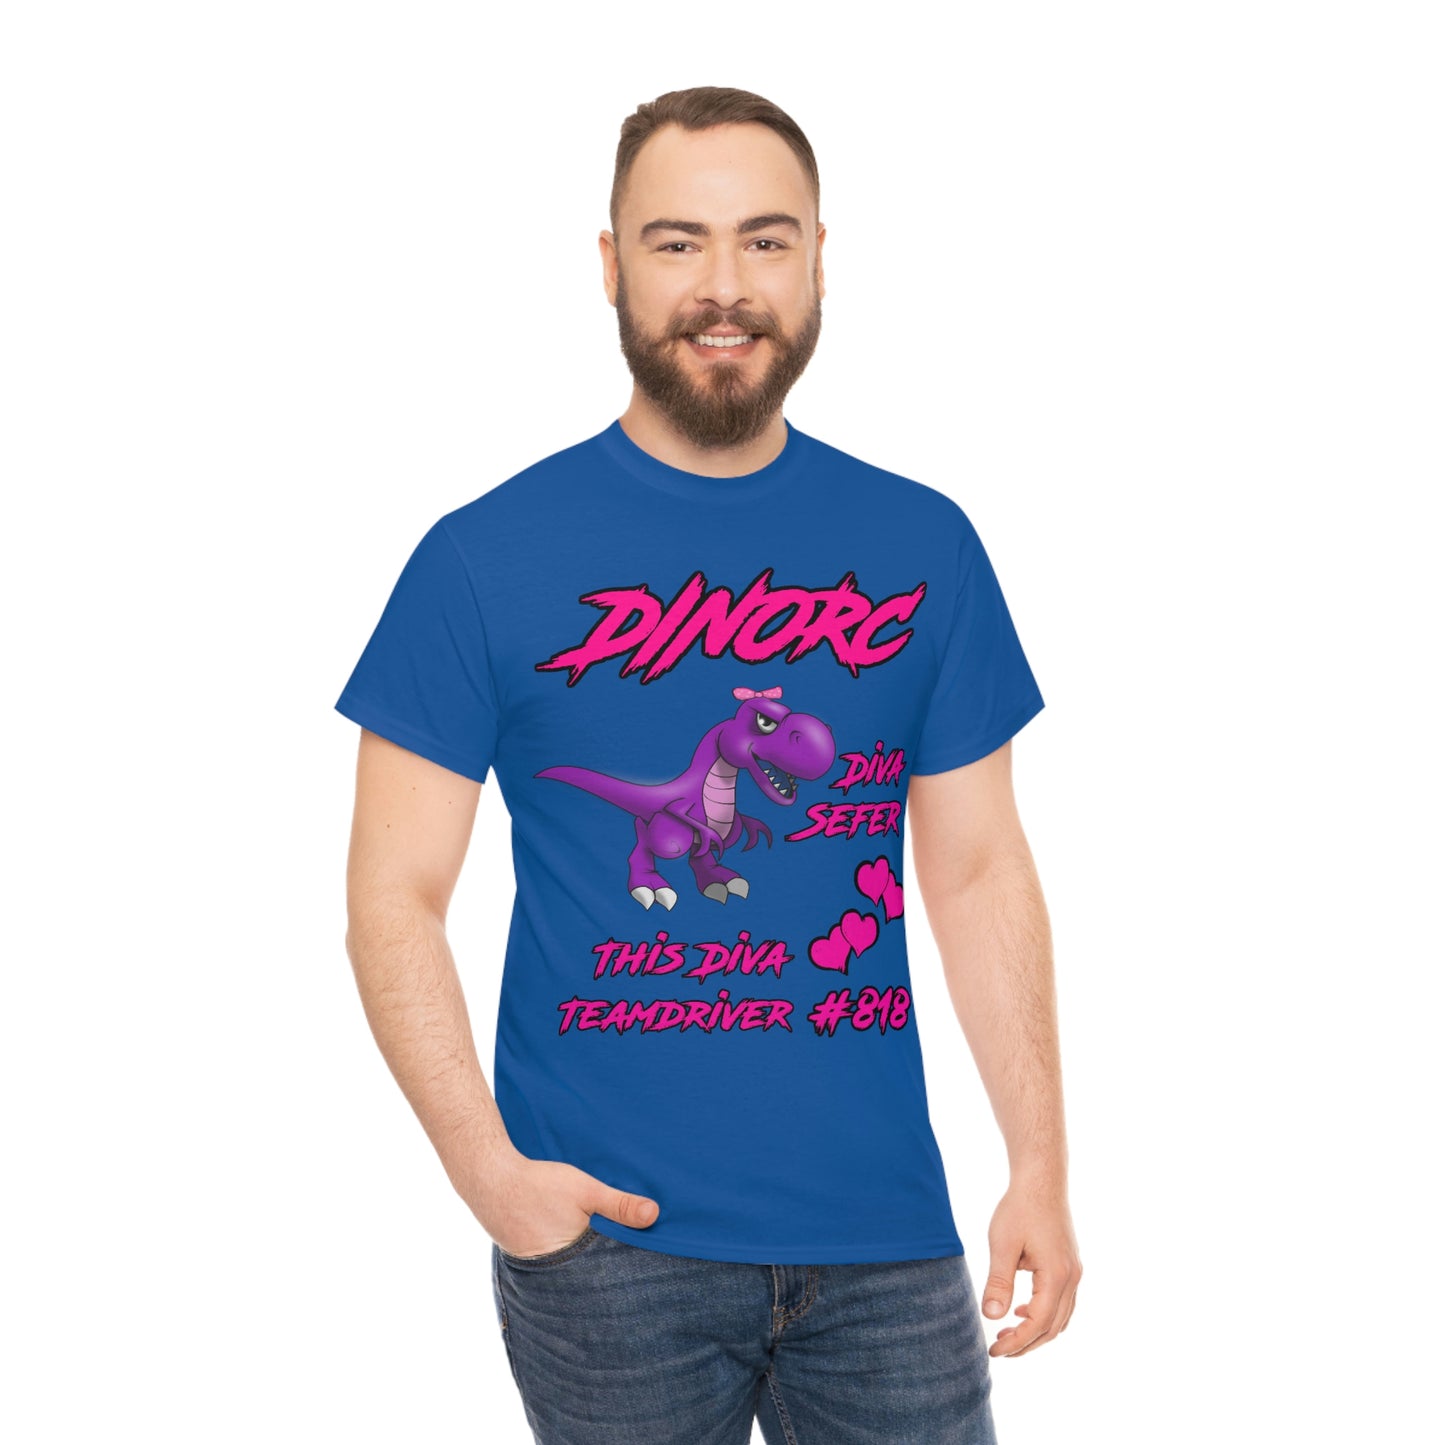 DinoRC Diva Sefer DinoRc Logo T-Shirt S-5x